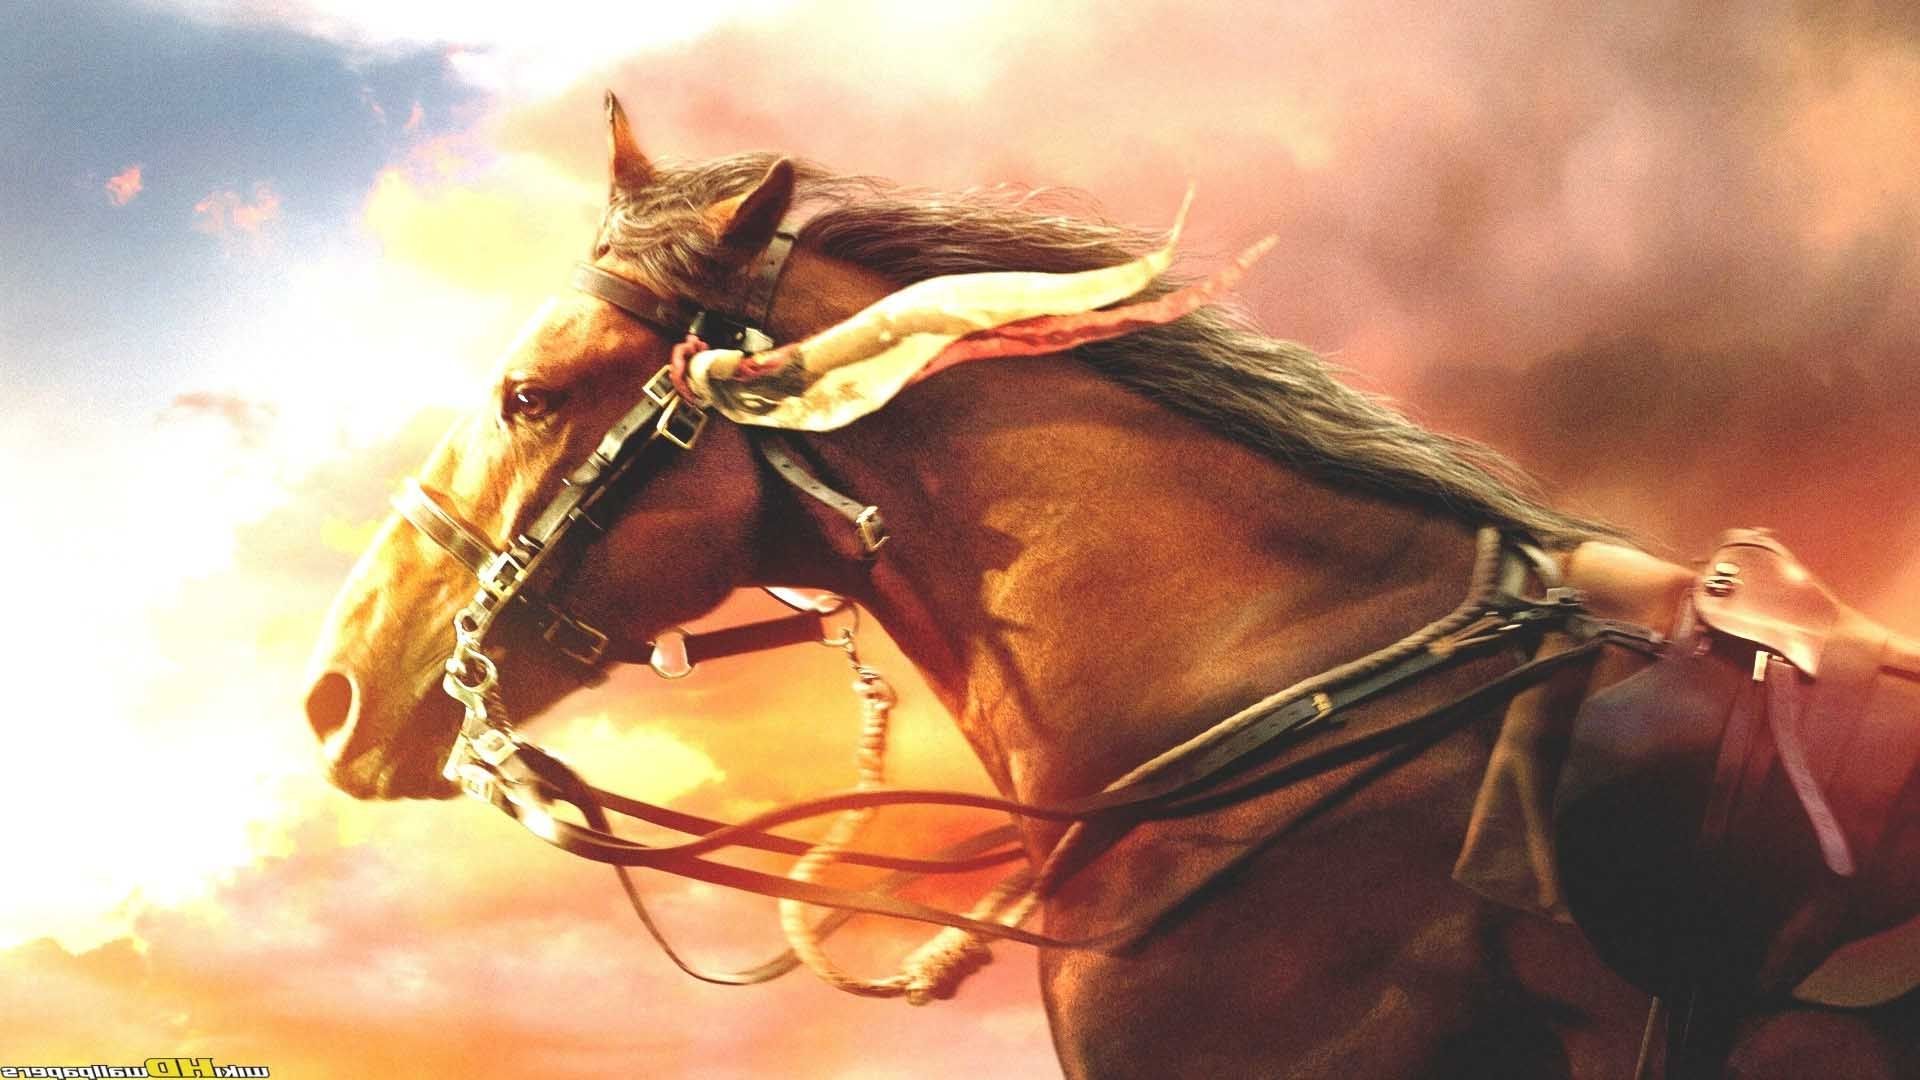 Free download War Horse Wallpaper and Background Image stmednet